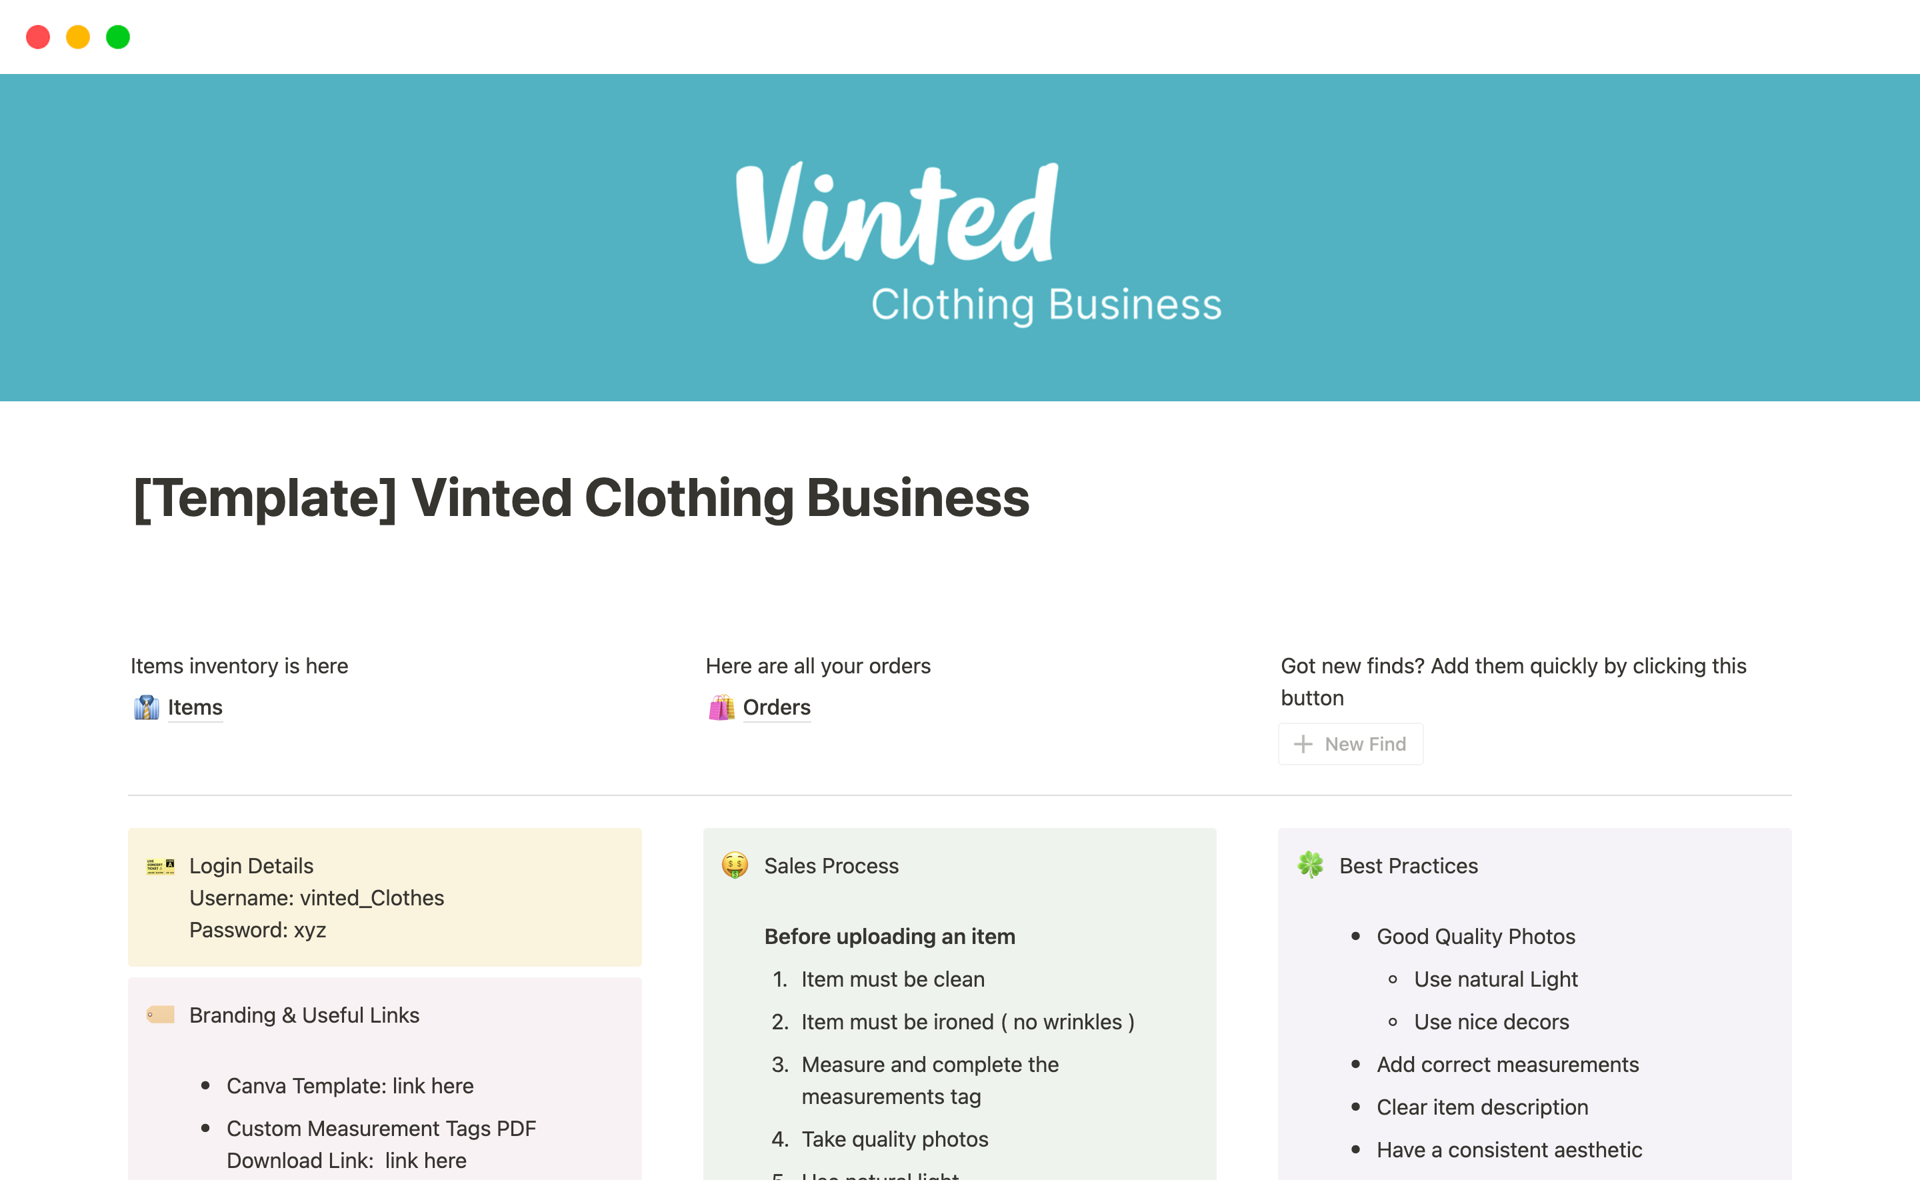 Vista previa de plantilla para Vinted Clothing Business